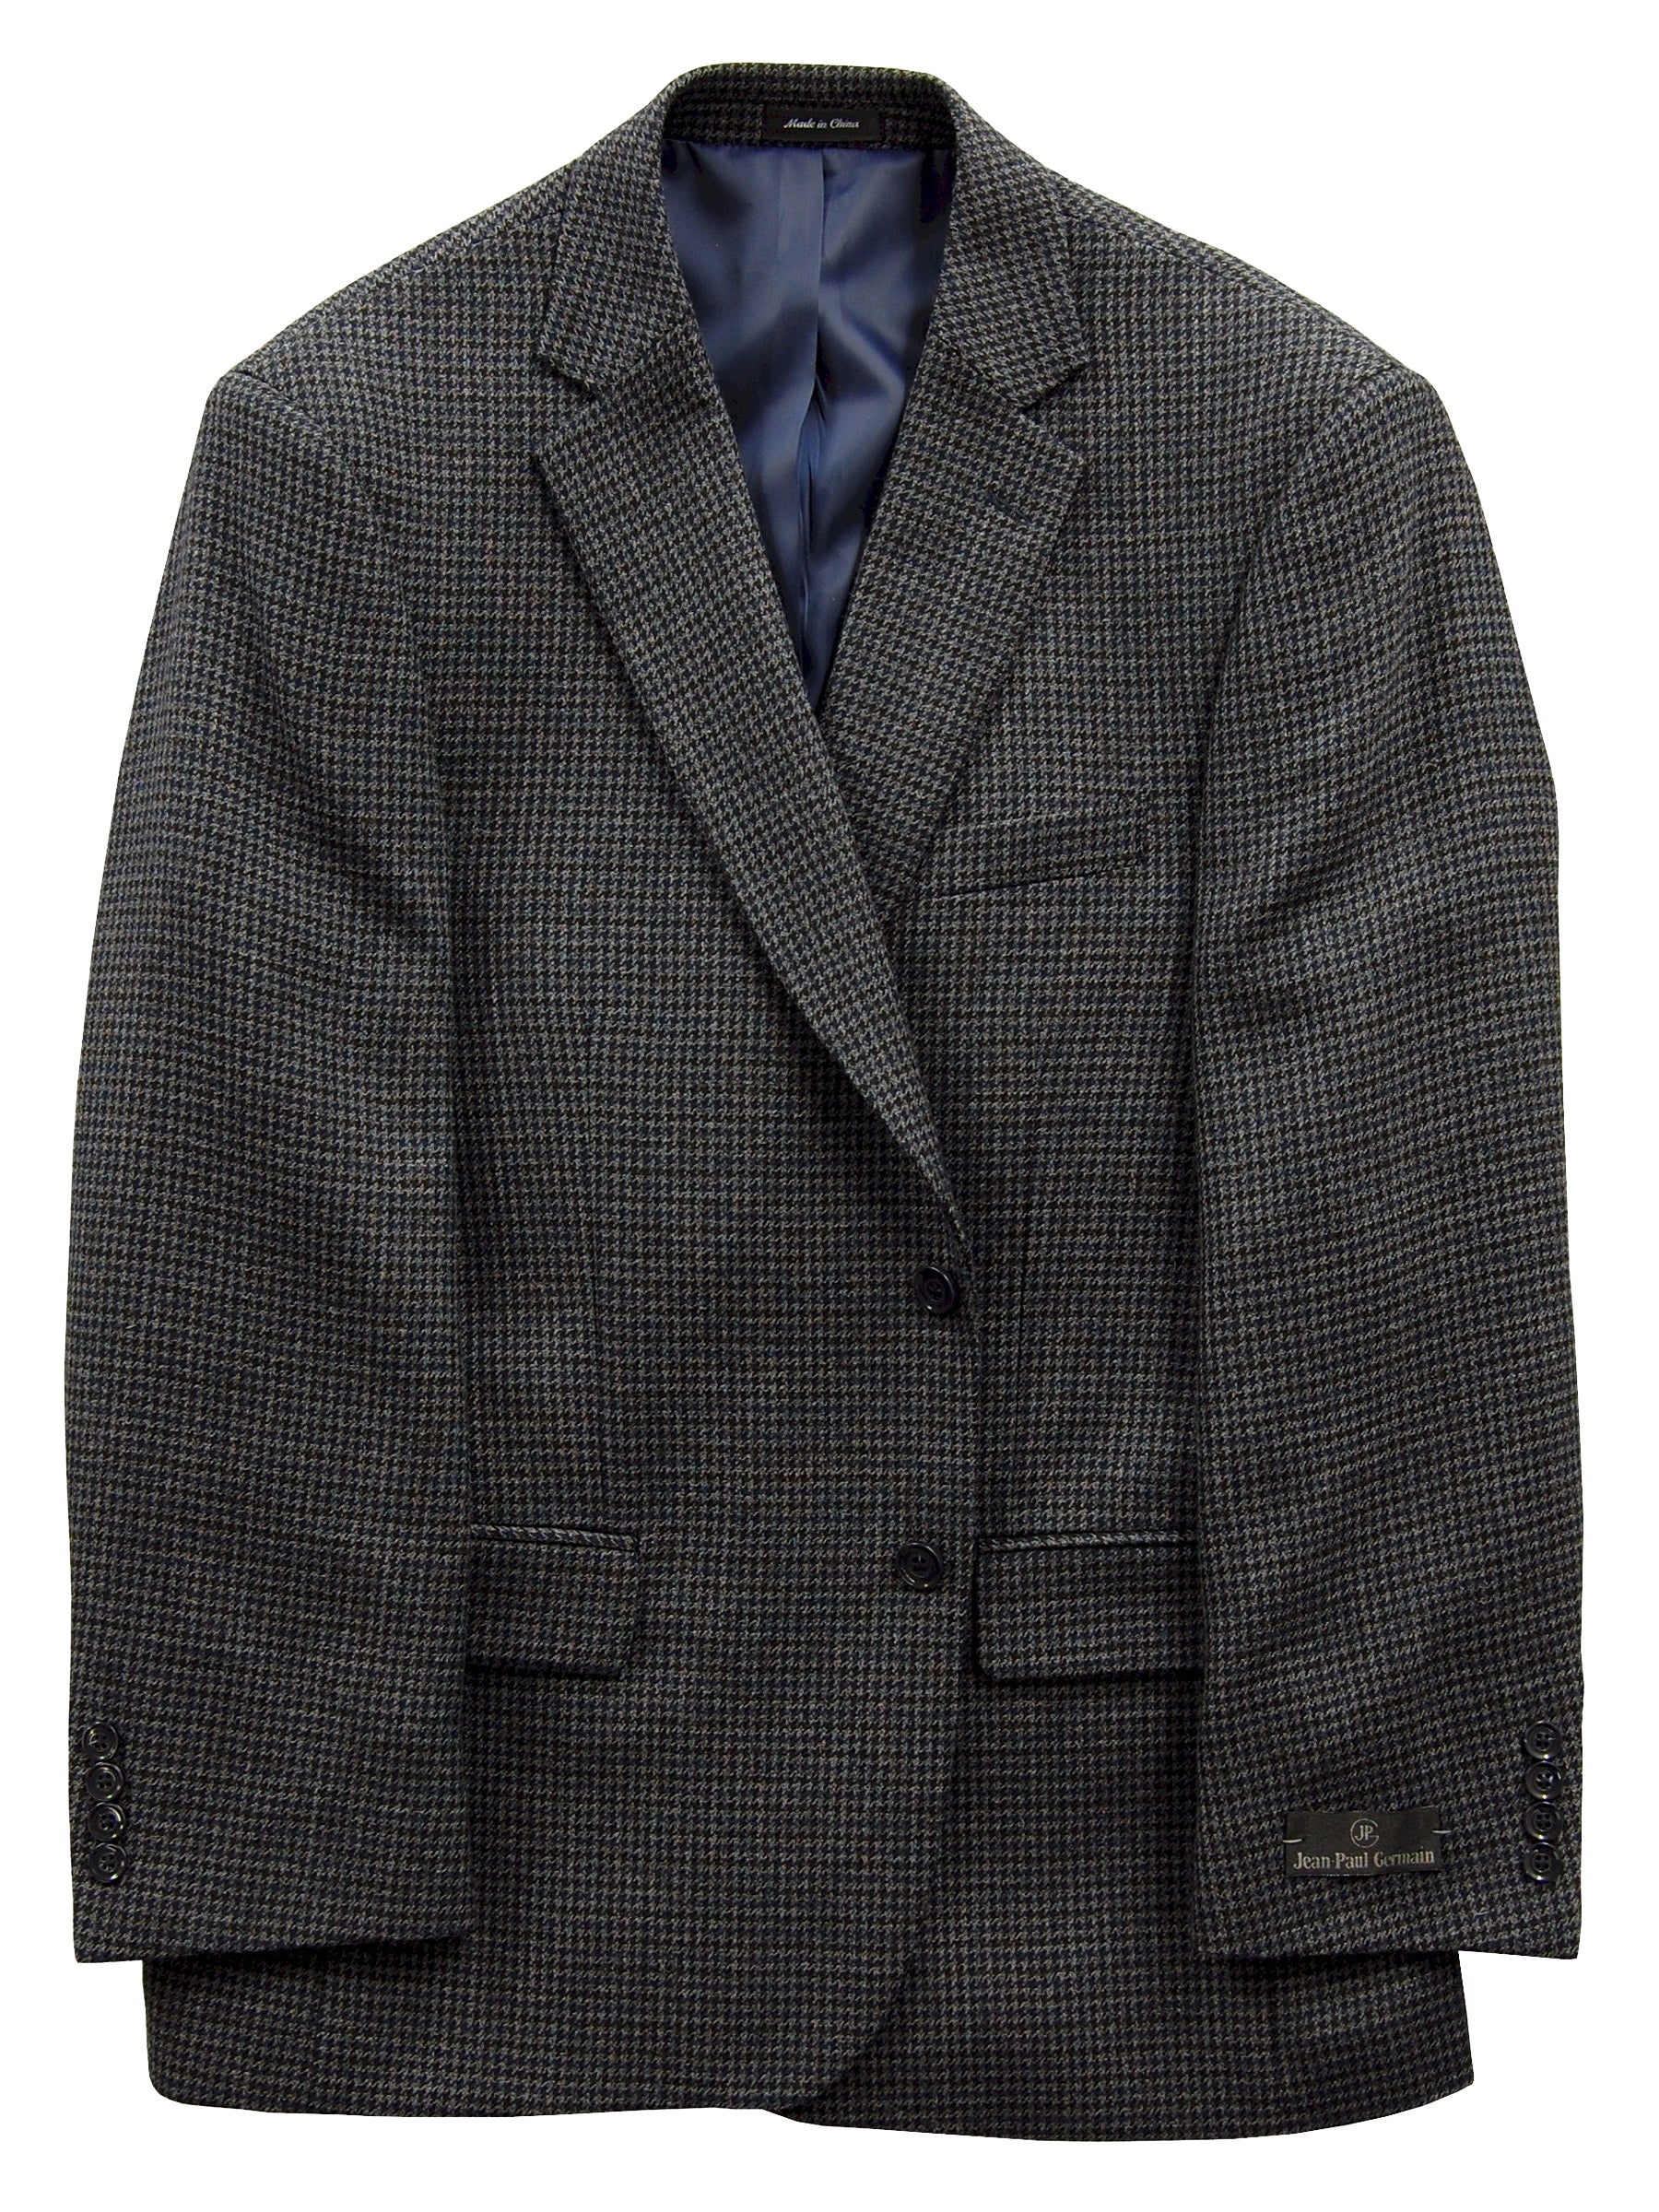 Jean-Paul Germain Wool Sport Coat by Harmony - Regular Sizes